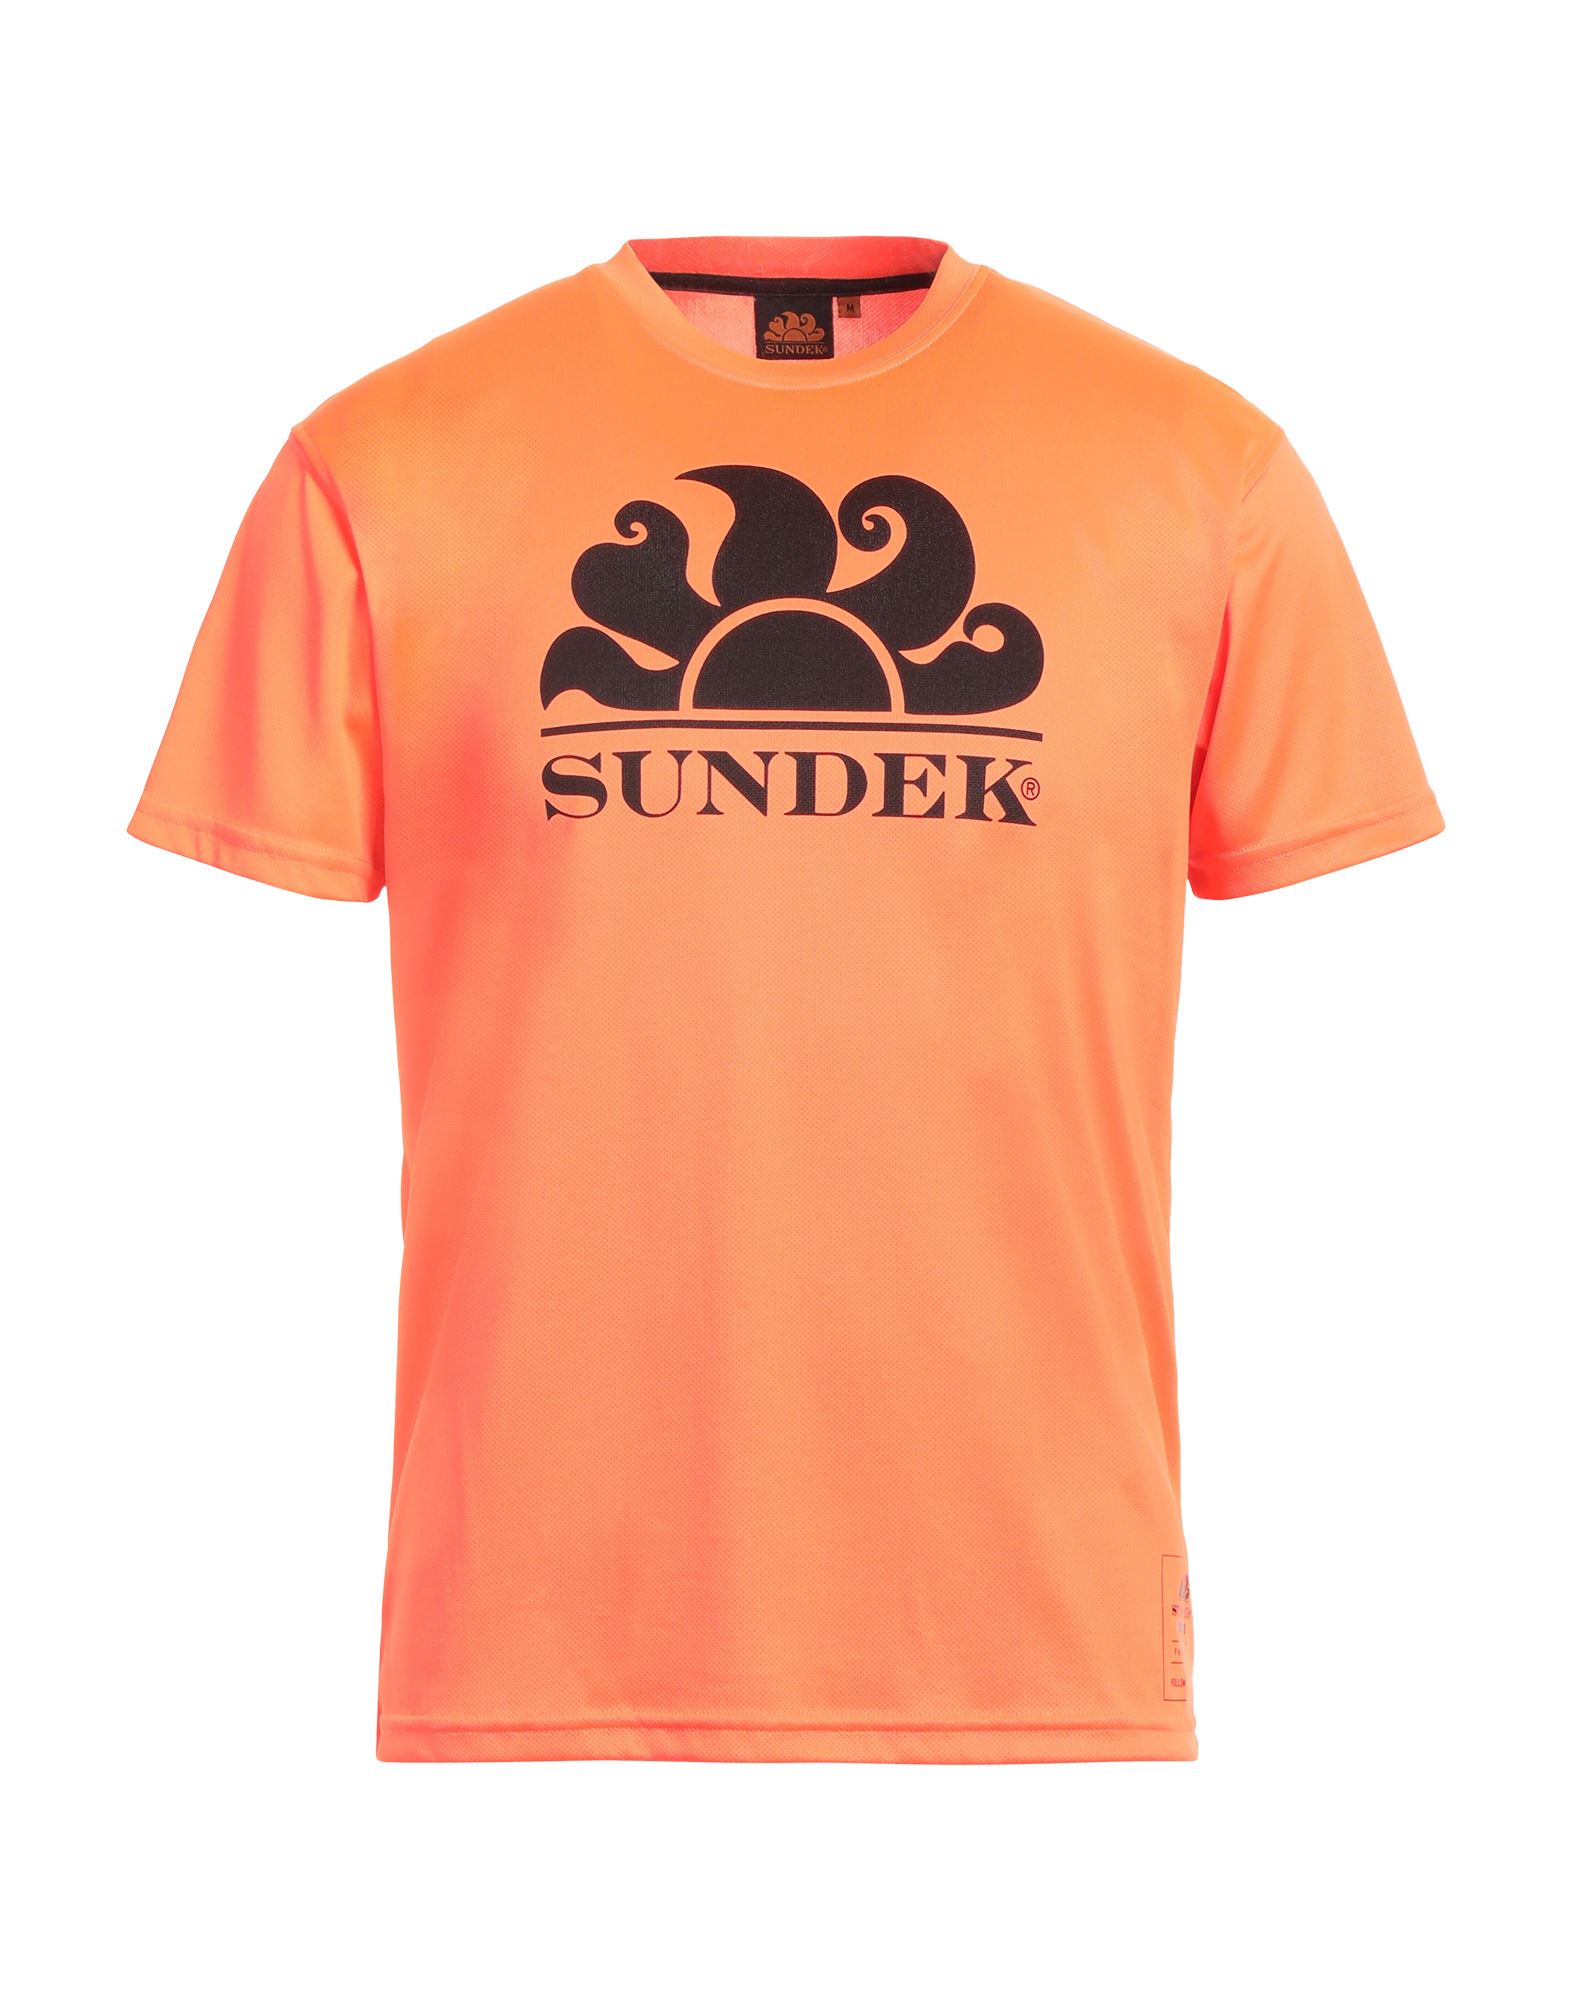 Sundek T-shirts In Orange